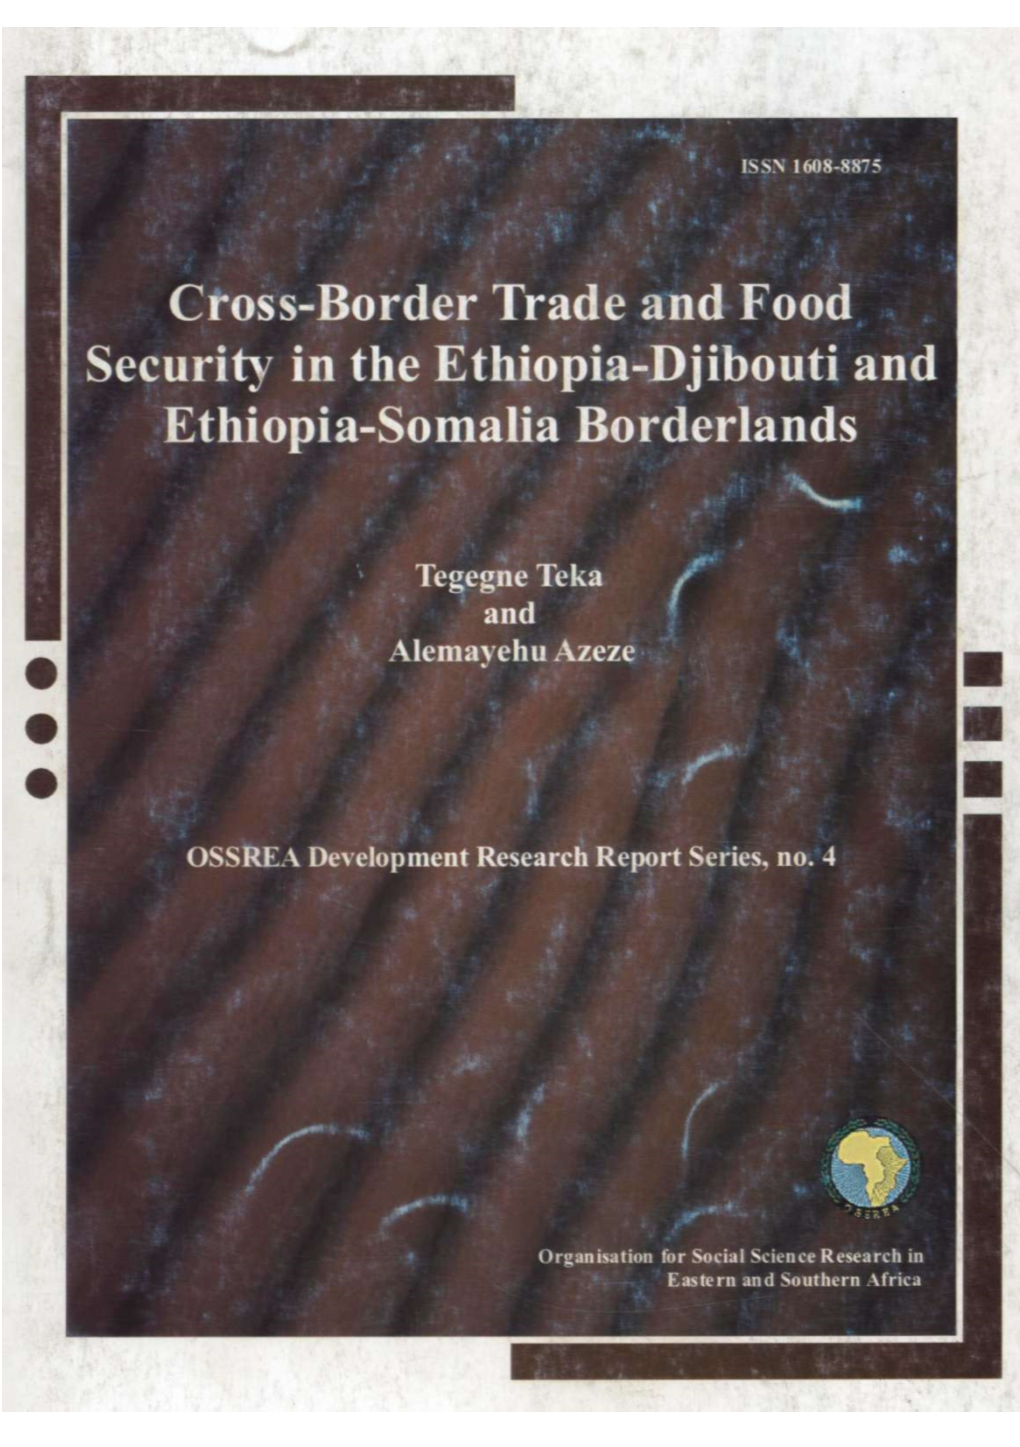 Cross-Border Livestock Trade and Food Security in the Ethiopia-Djibouti and Ethiopia-Somalia Borderlands